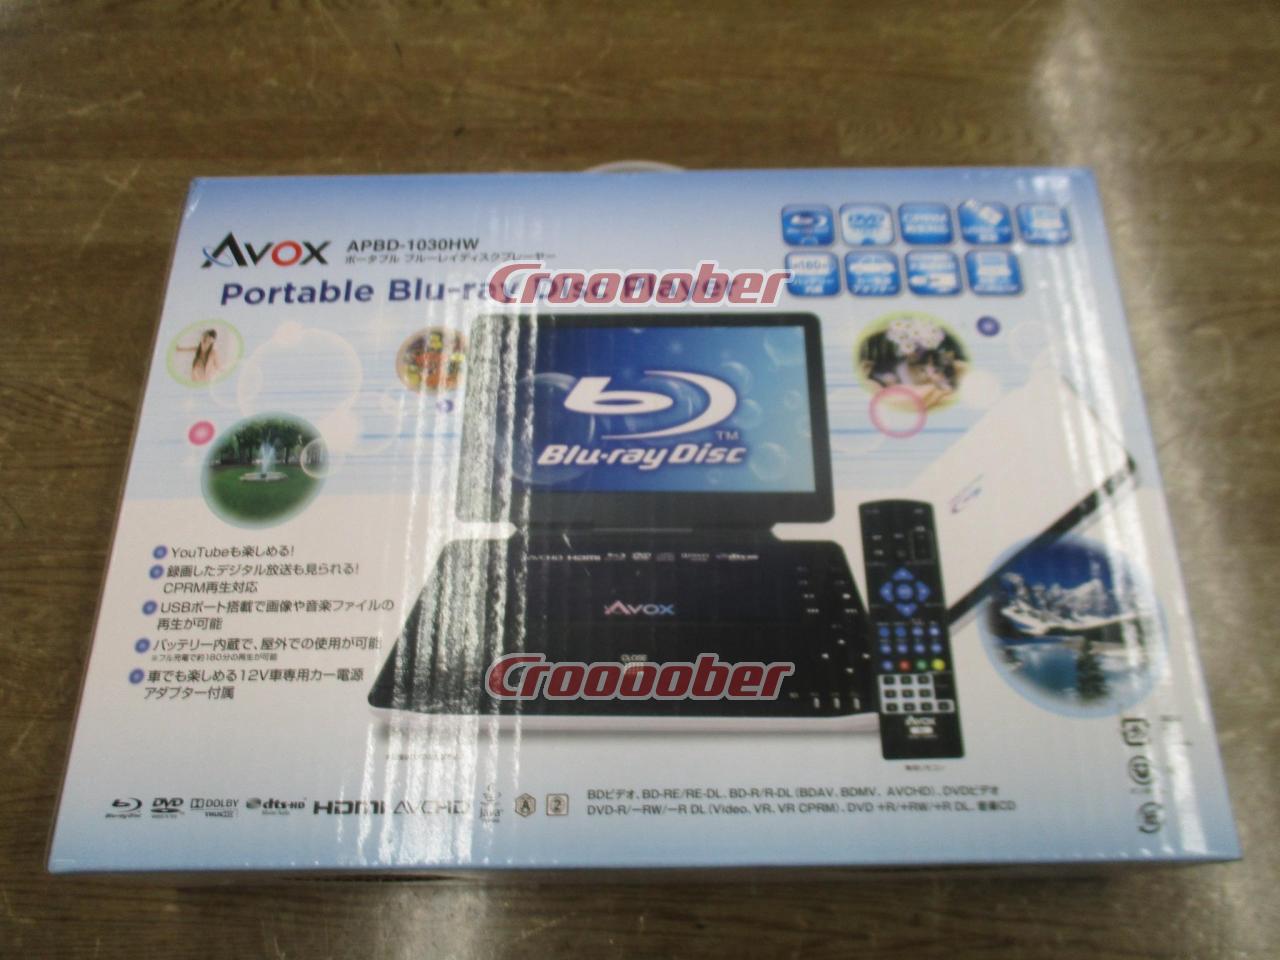 AVOX APBD-1030HW Portable Blu-ray Disc Player | Other DVD Players